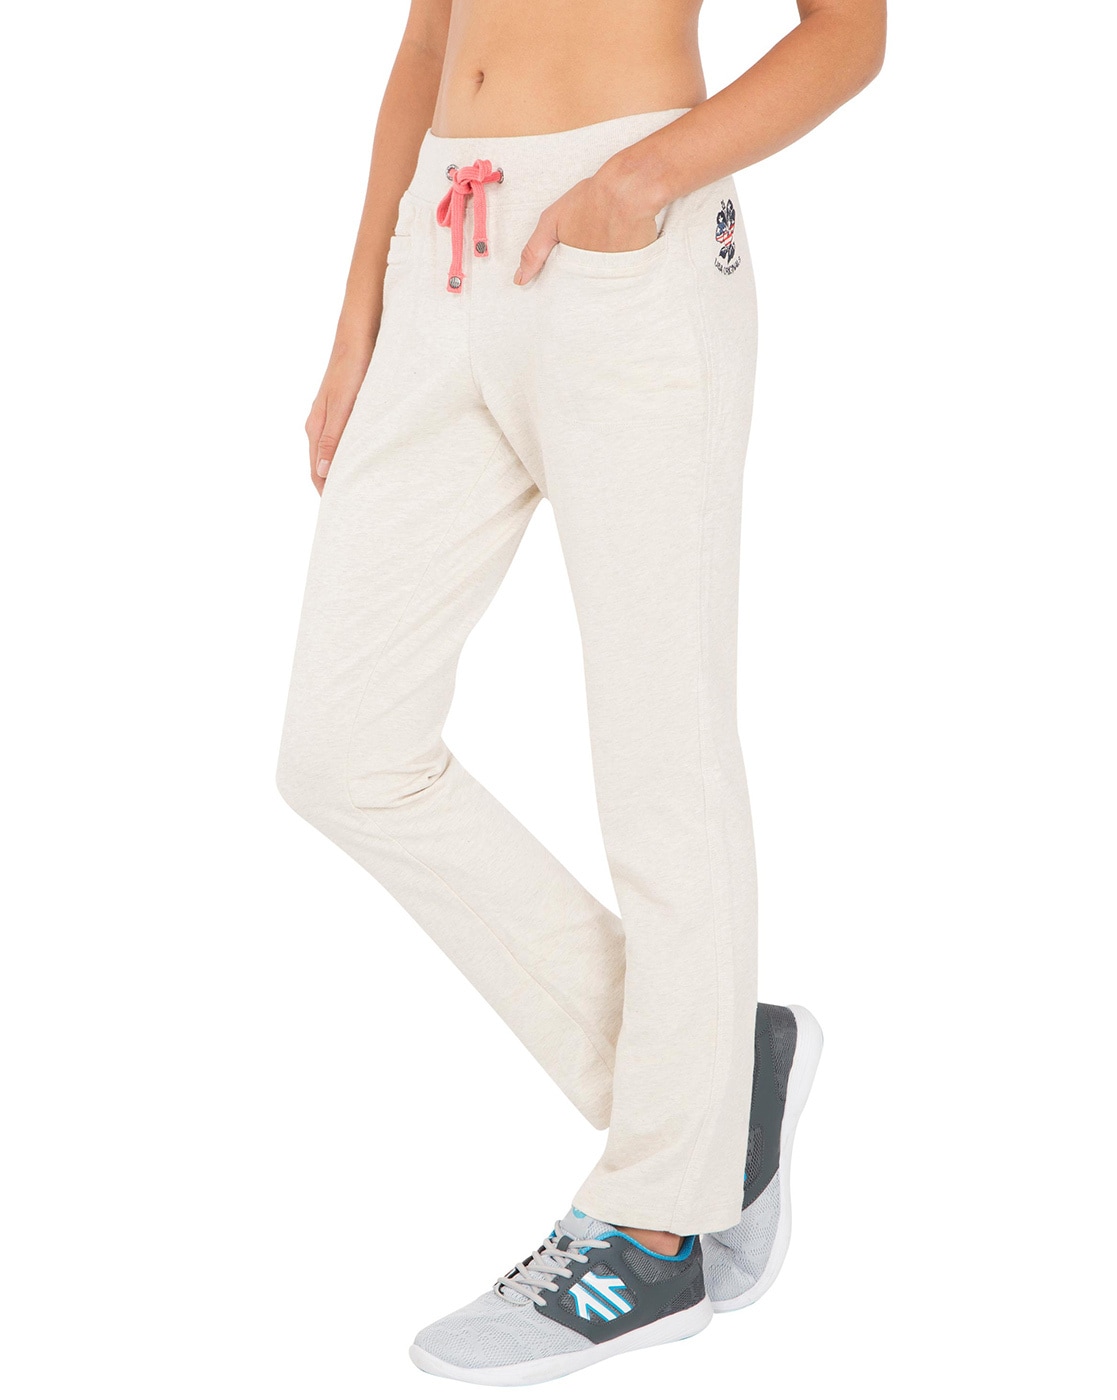 Buy Teal Blue Track Pants for Women by Jockey Online | Ajio.com